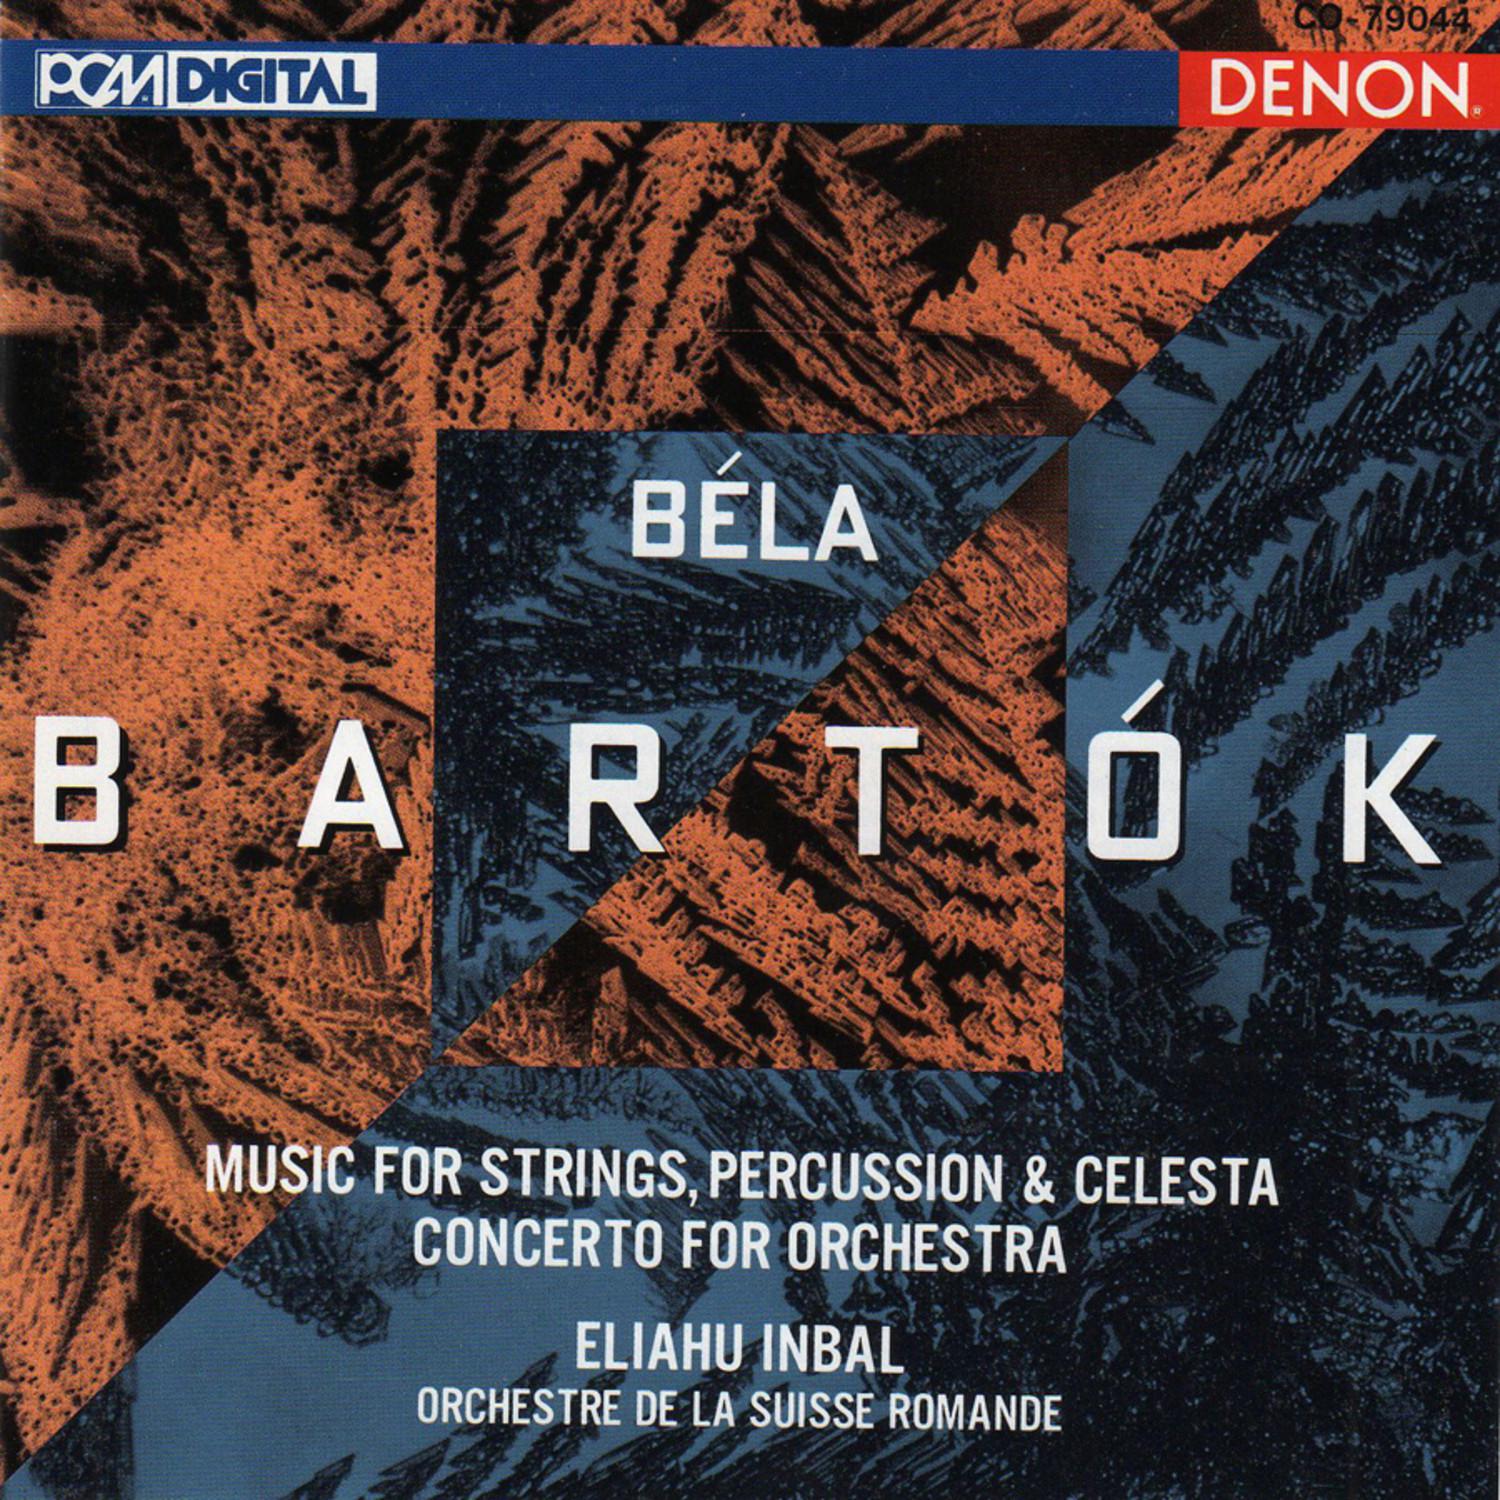 Barto k: Music for Strings, Percussion and Celesta, Concerto for Orchestra